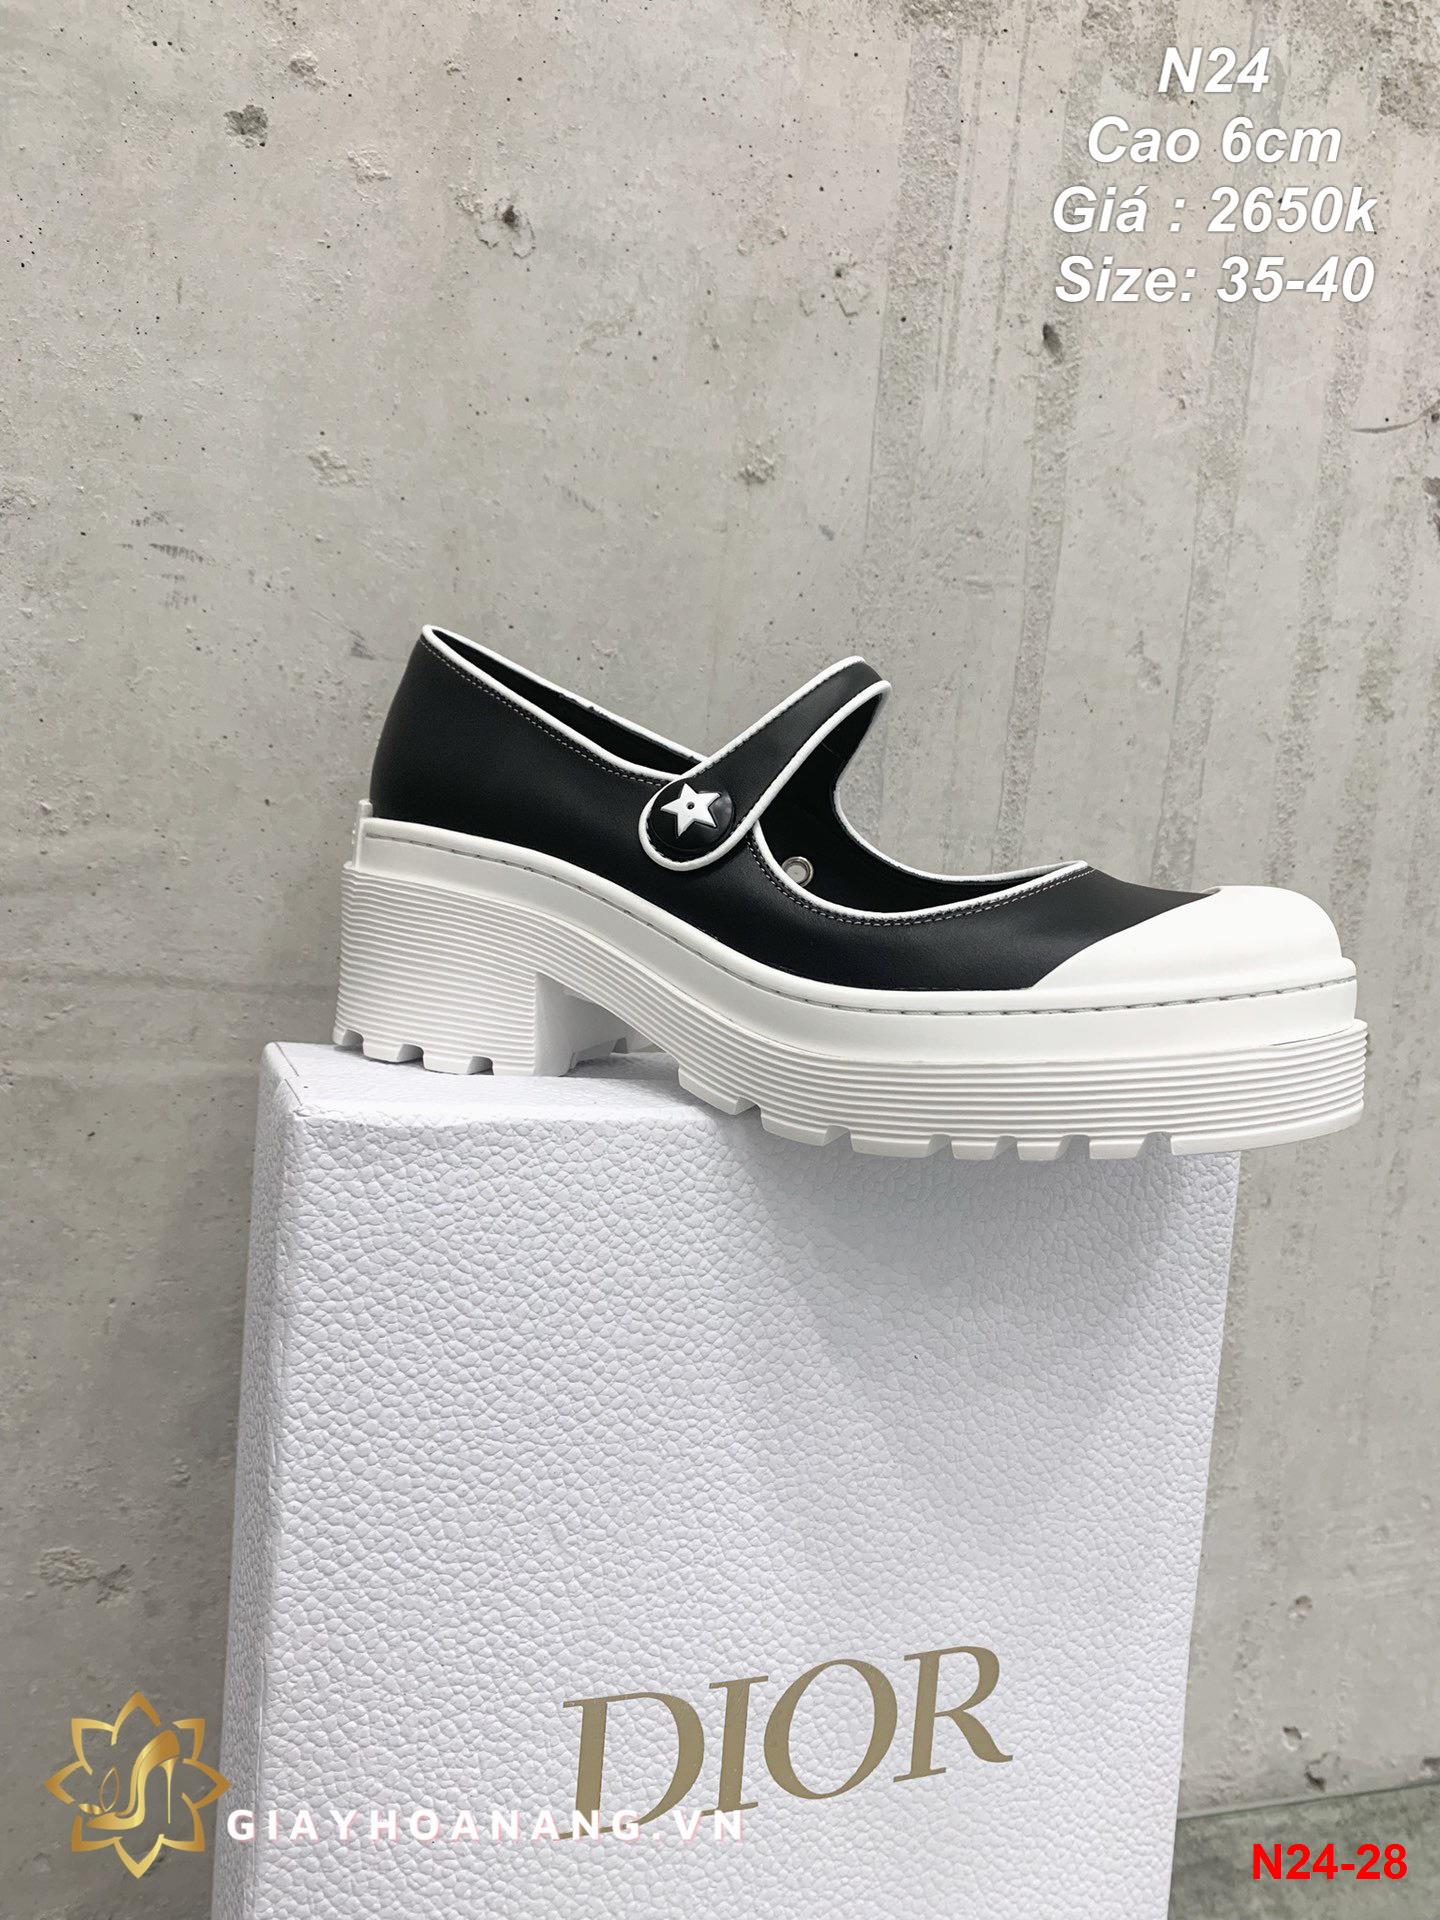 N24-28 Dior sandal cao 6cm siêu cấp